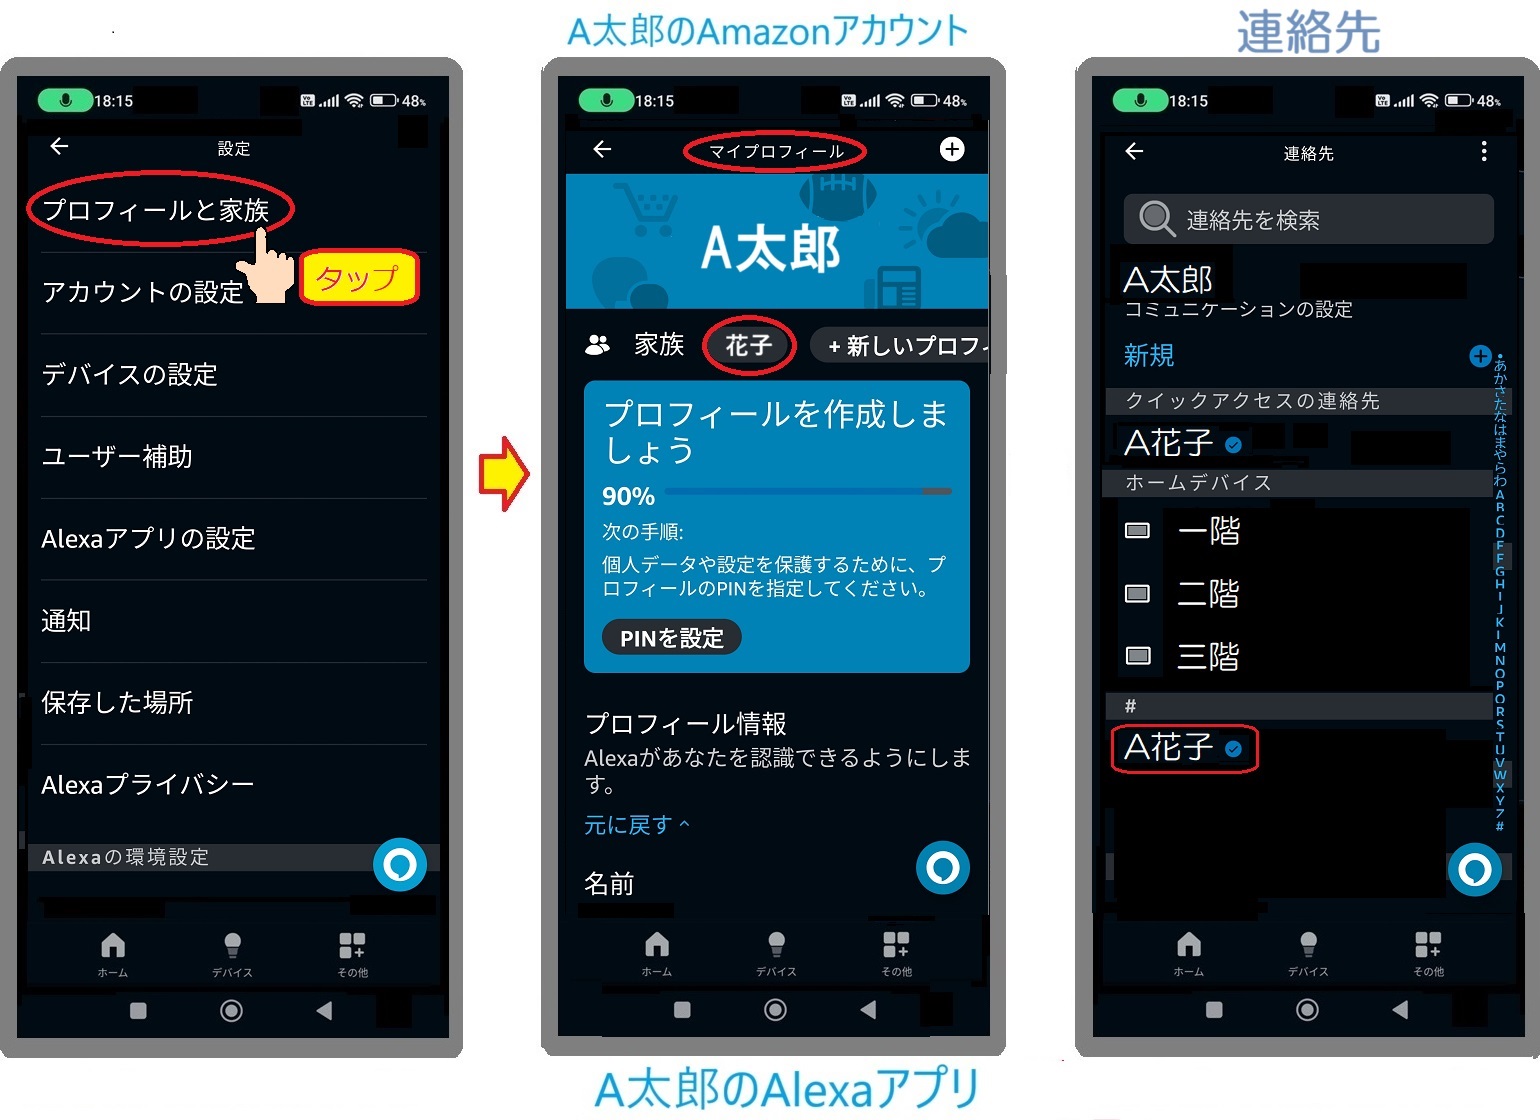 A太郎のAmazonアカウントでログインした太郎のAlexaアプリのプロフィールと家族に花子が登録されている